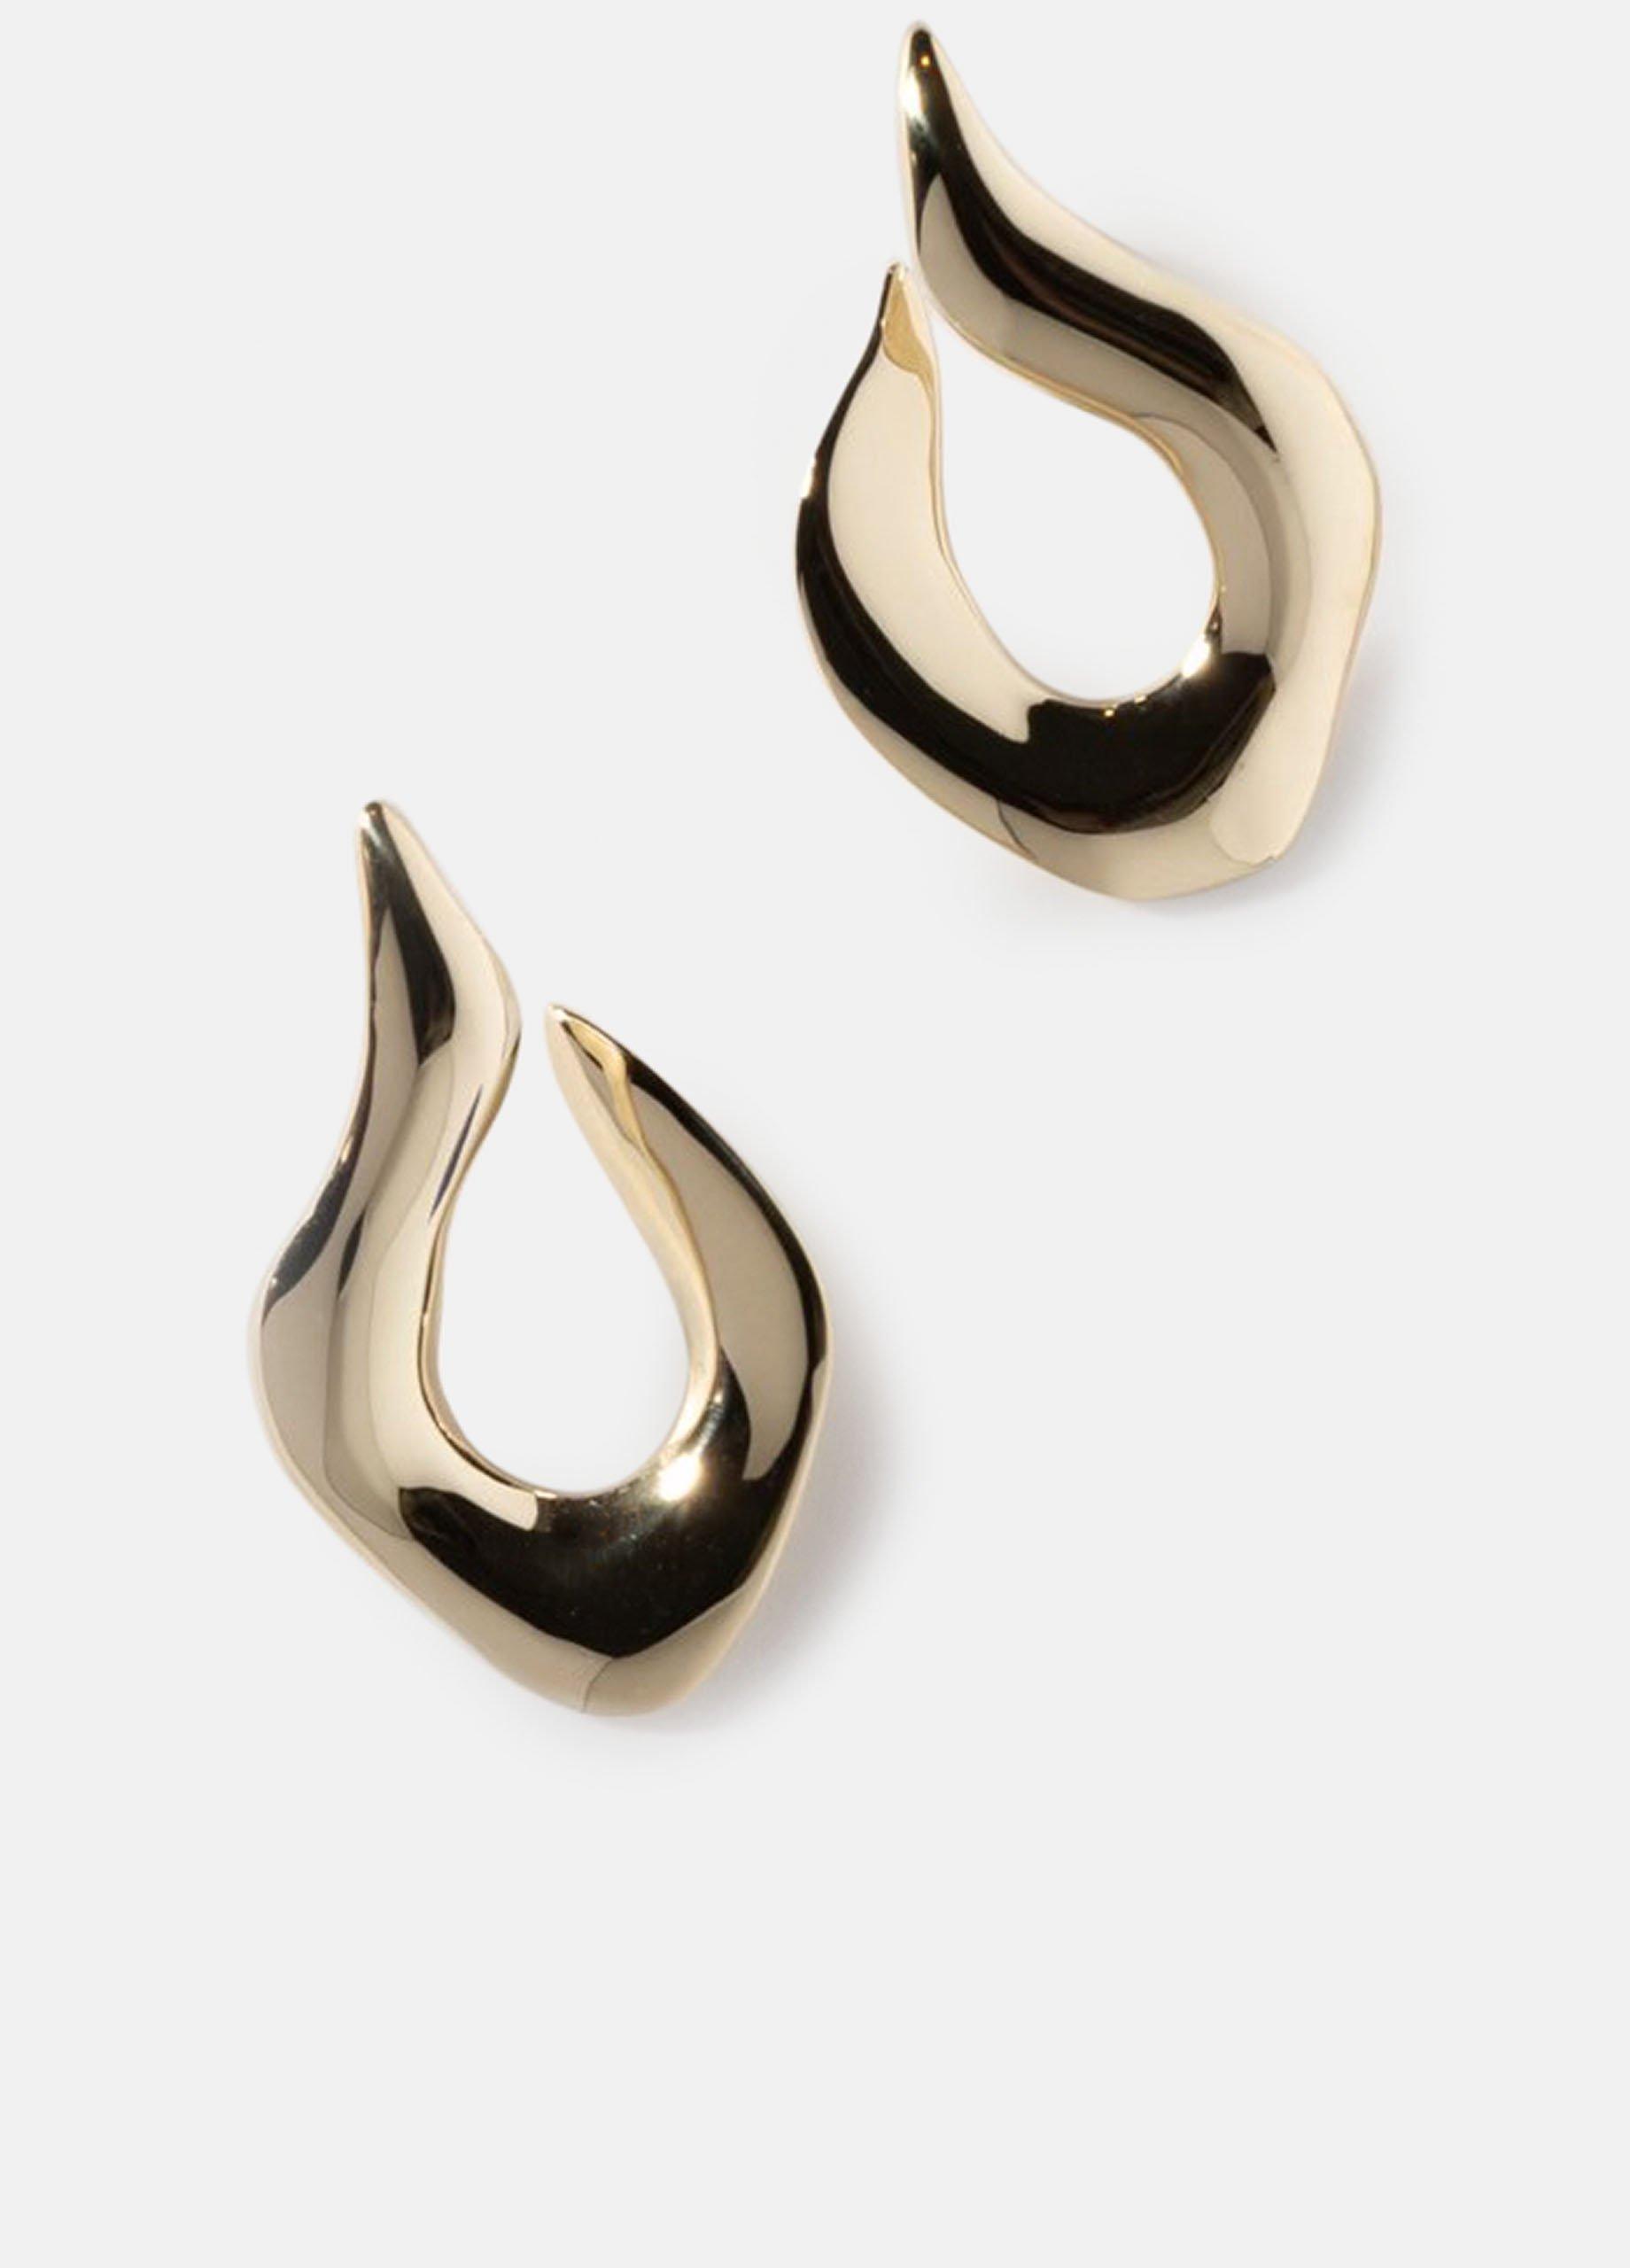 CHANEL Metal CC Engraved Stud Earrings Silver 253429